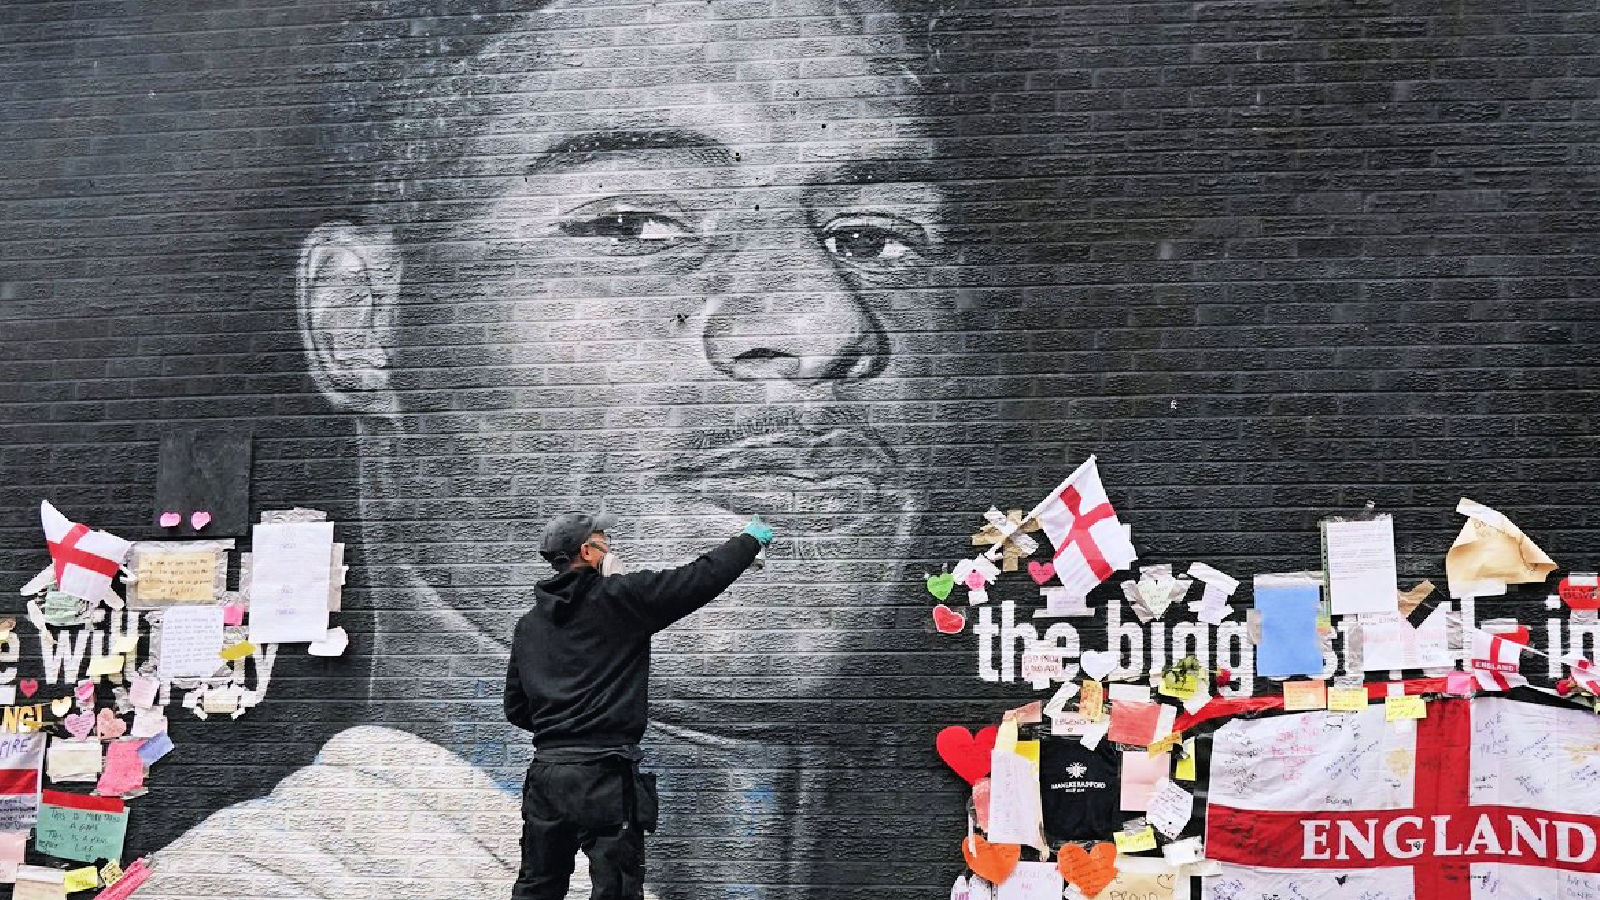 Watch: Original artist resprays defaced Marcus Rashford mural in Manchester